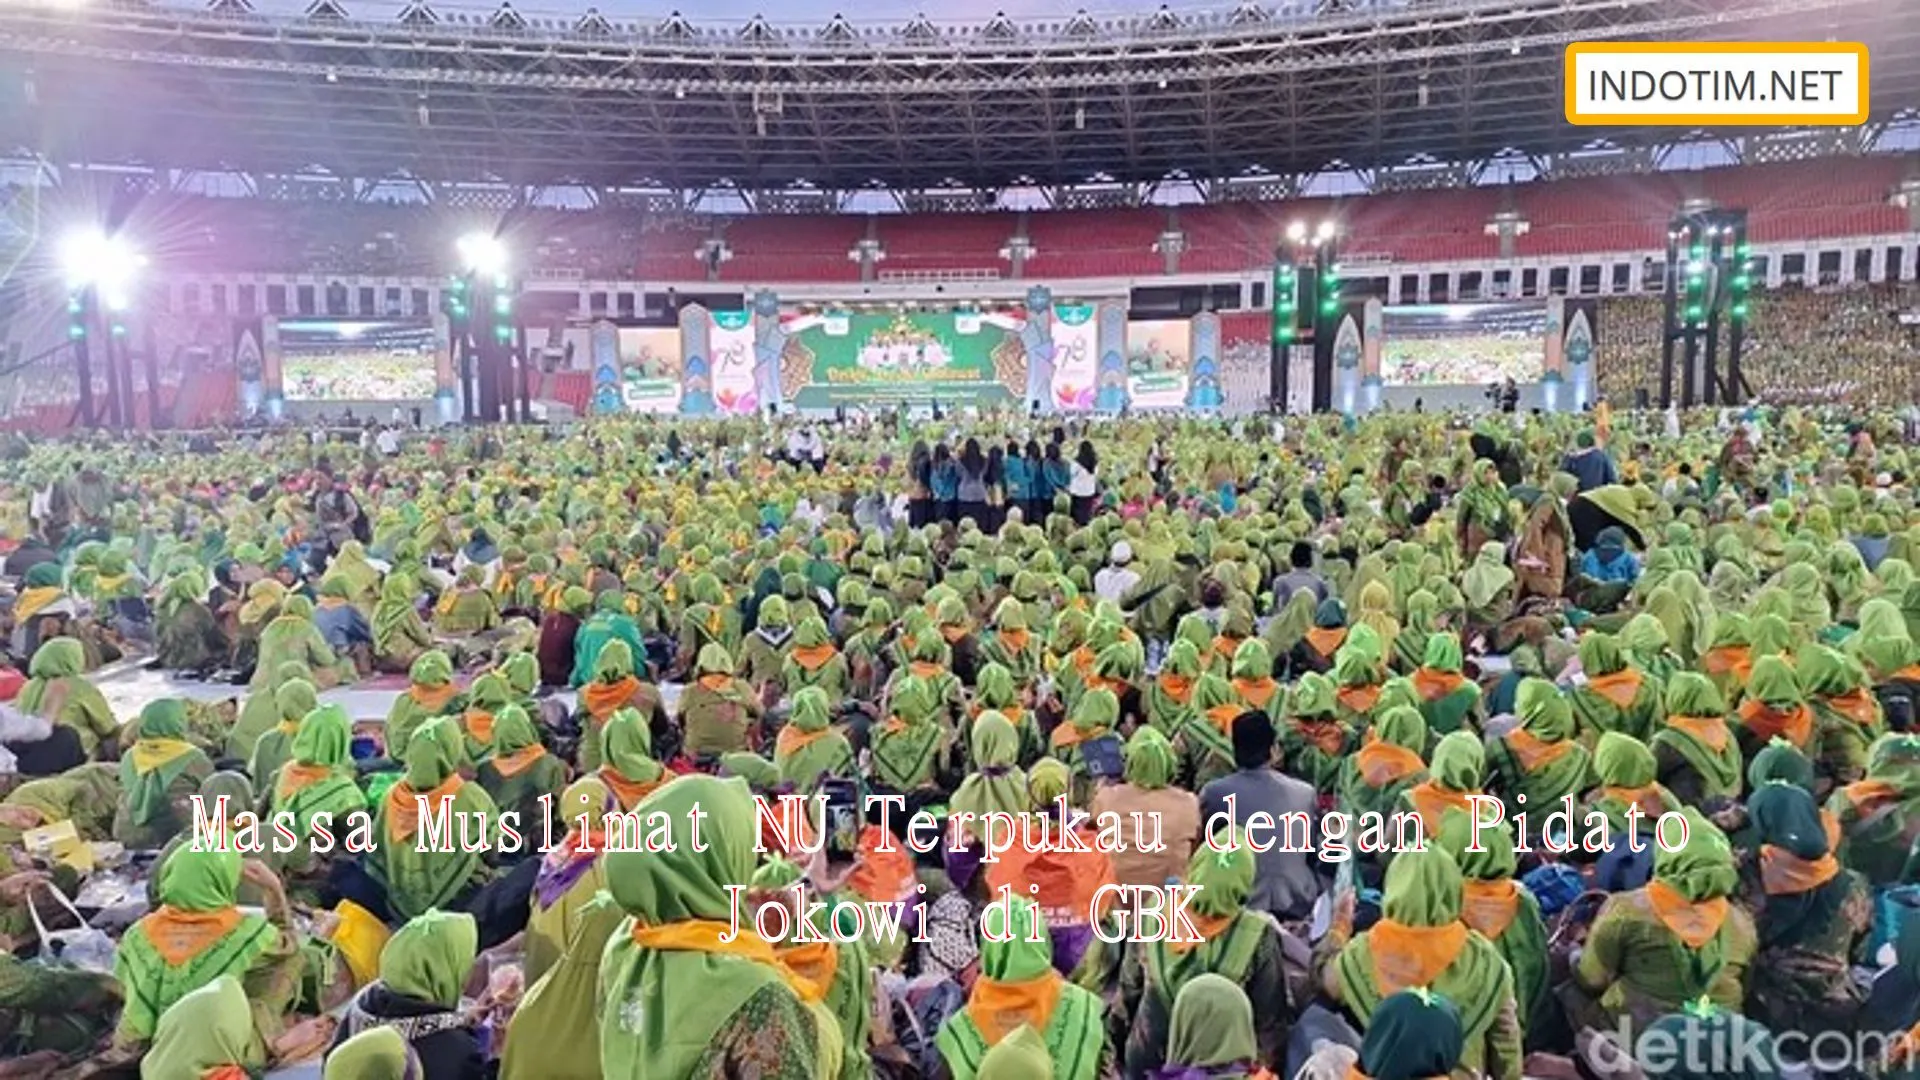 Massa Muslimat NU Terpukau dengan Pidato Jokowi di GBK